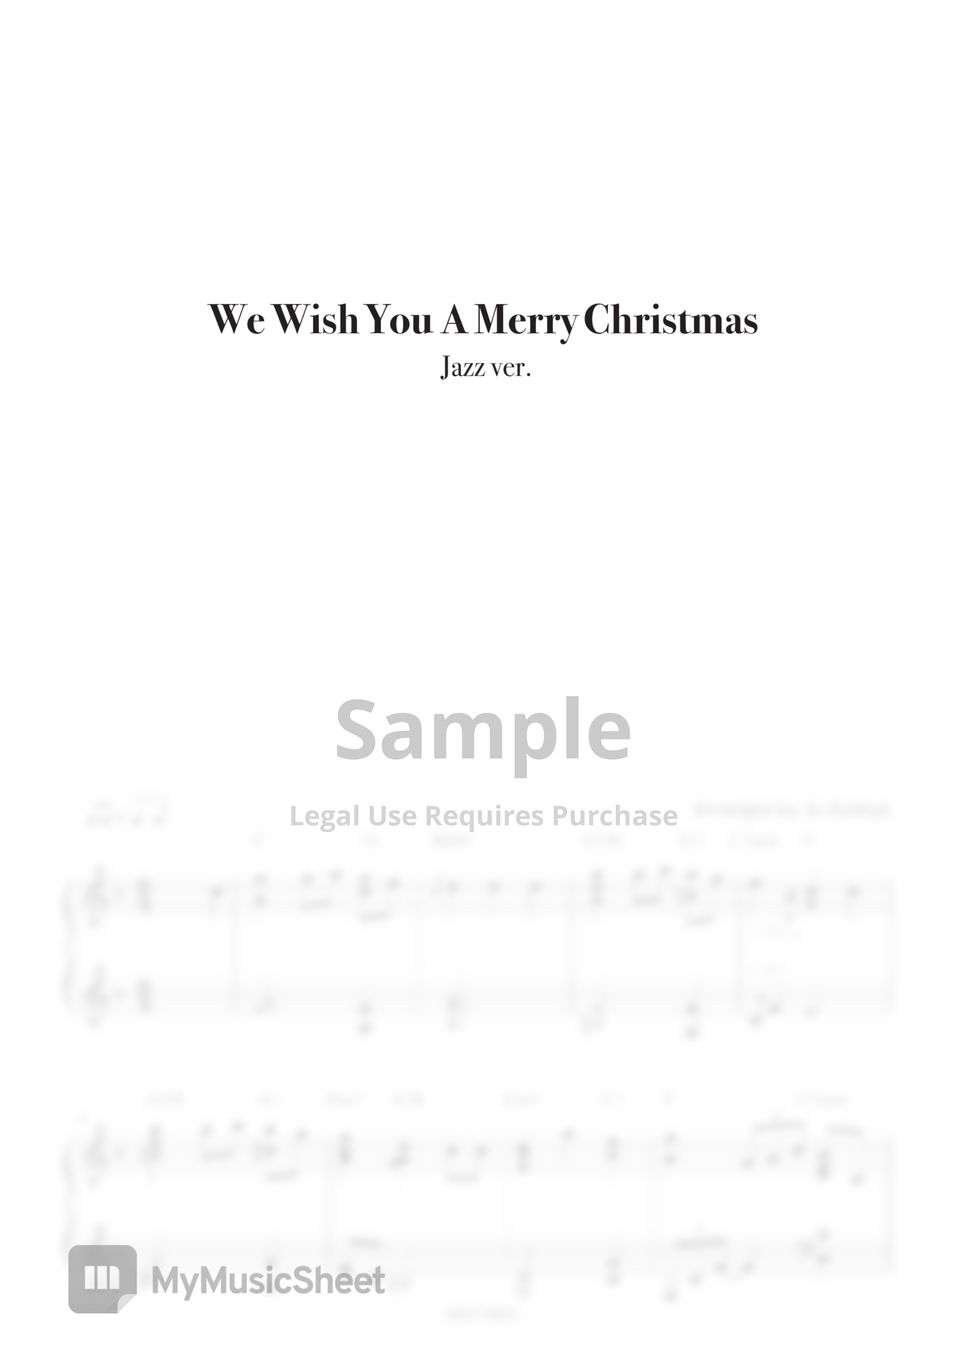 Christmas Carol - We Wish You A Merry Christmas (Jazz ver.) by Ju Eunhye